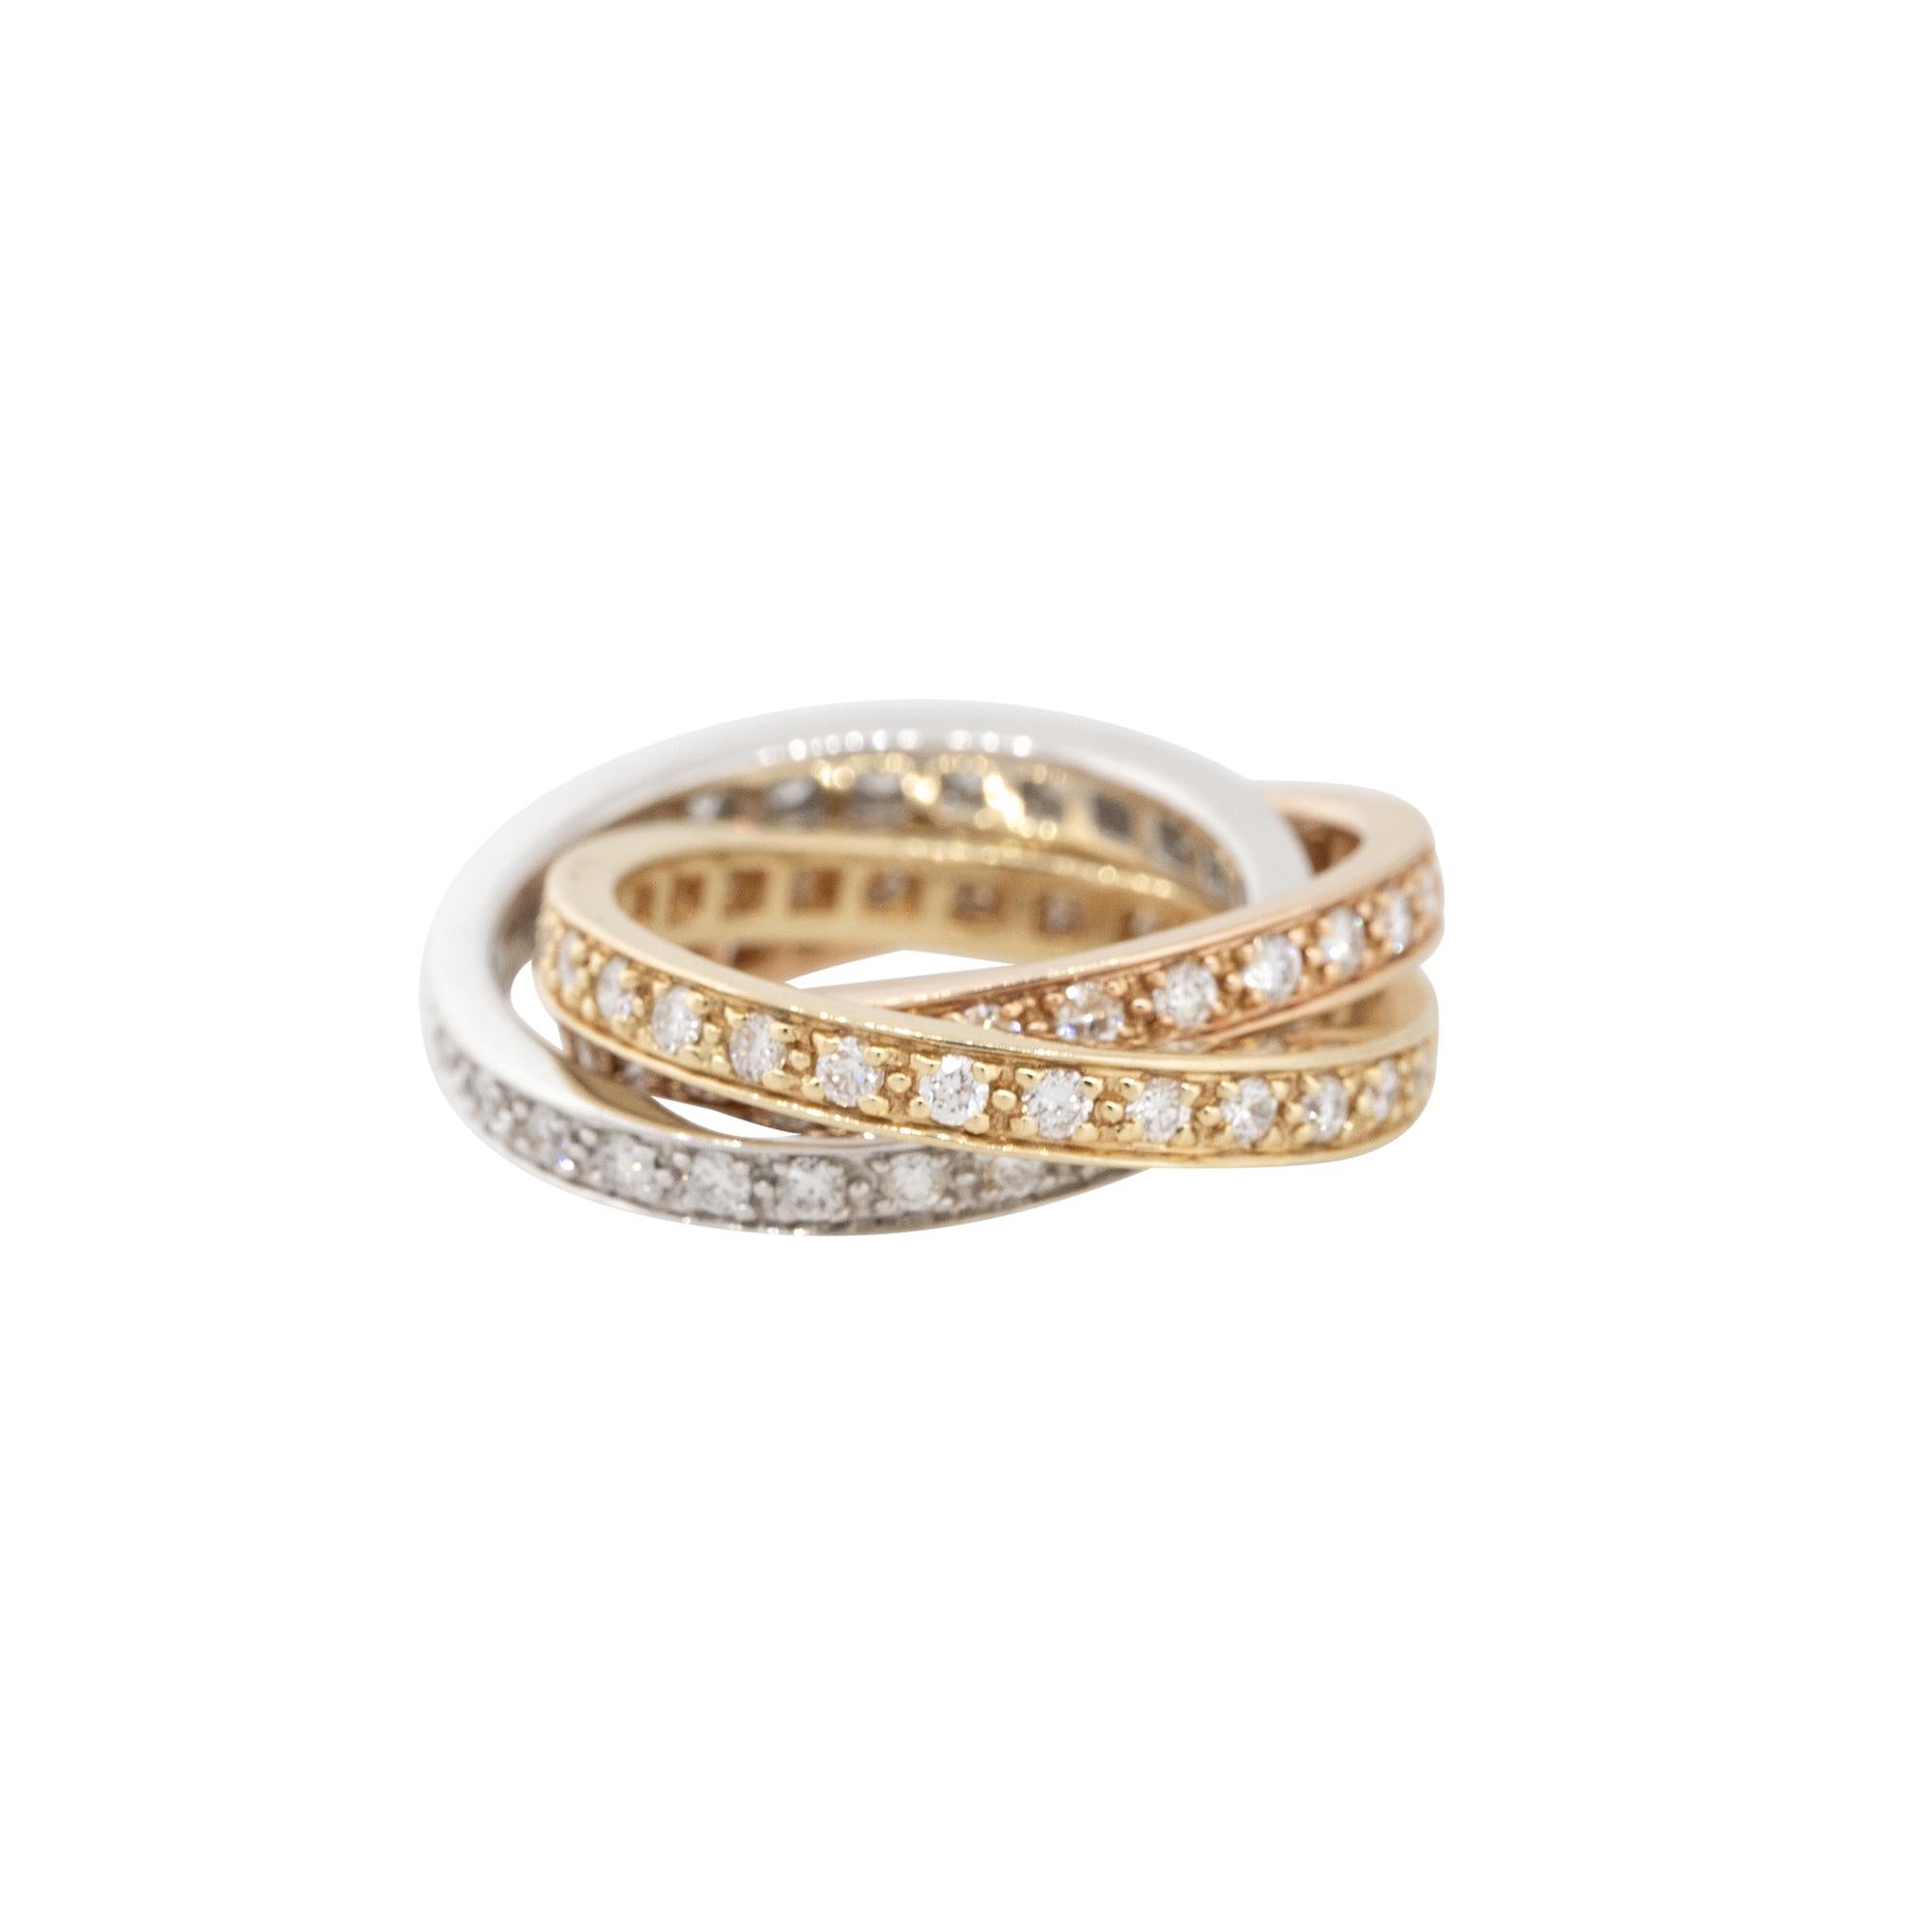 Modern 1.88 Carat Diamond Intertwined Ring 18 Karat in Stock For Sale